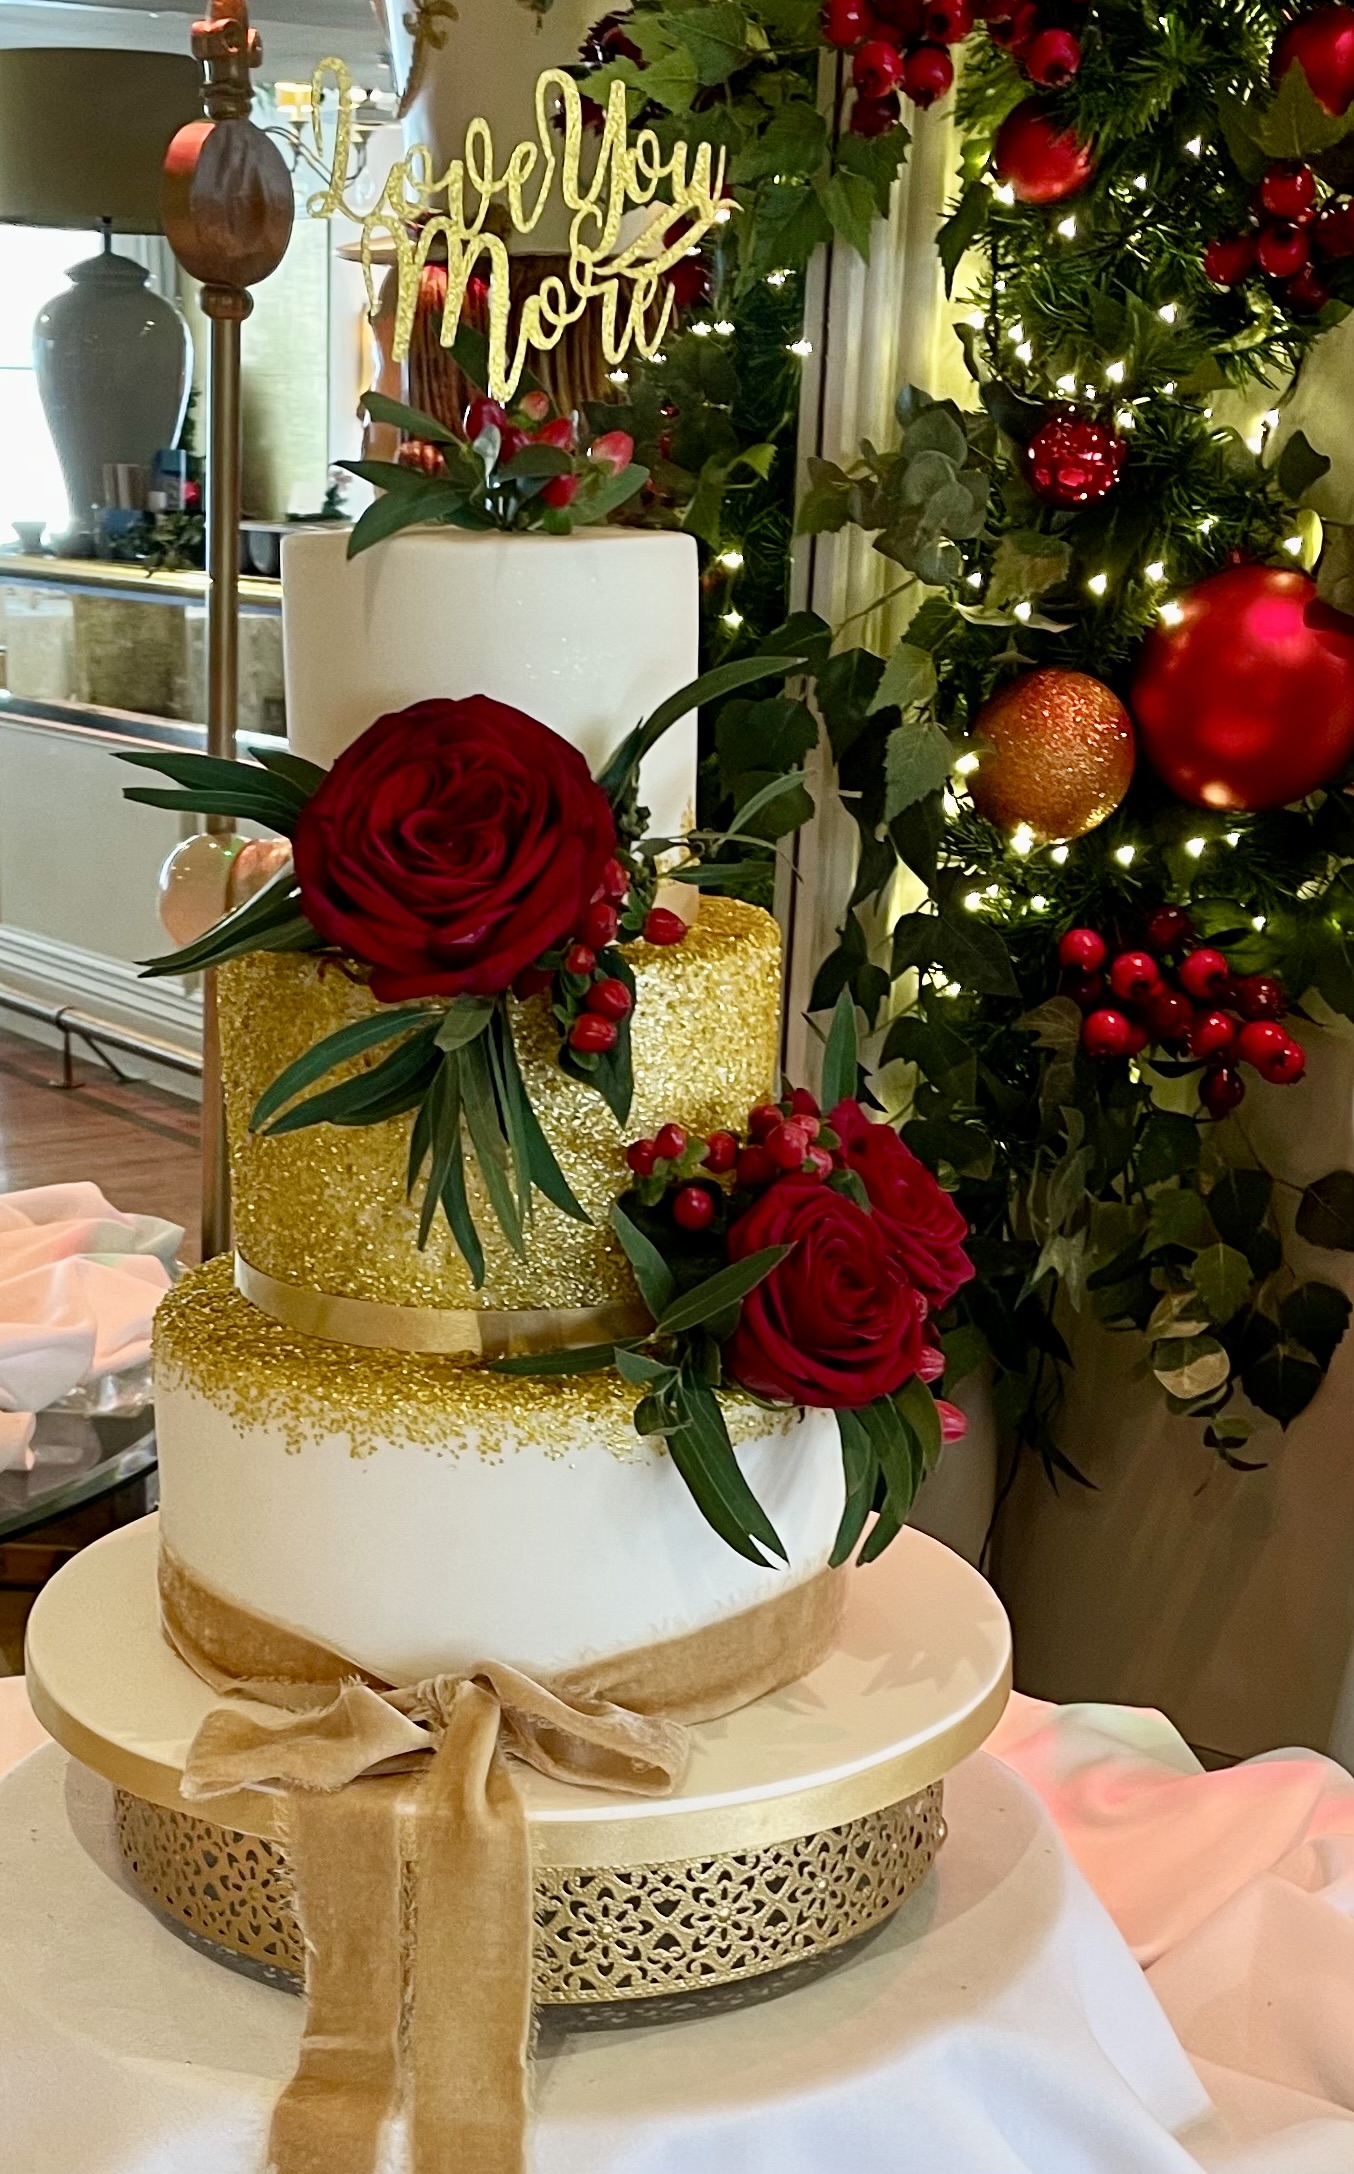 3-Tier Wedding Cake, Roslin Beach Hotel, Southend on Sea – December 2021